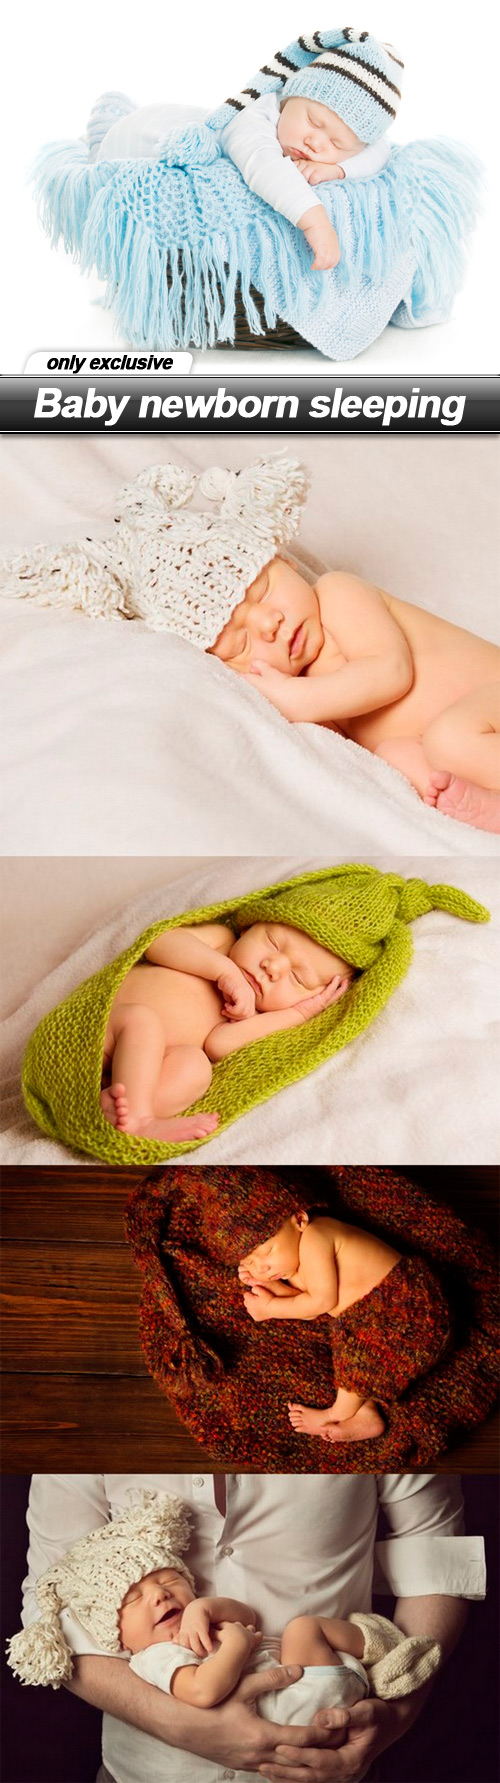 Baby newborn sleeping - 5 UHQ JPEG